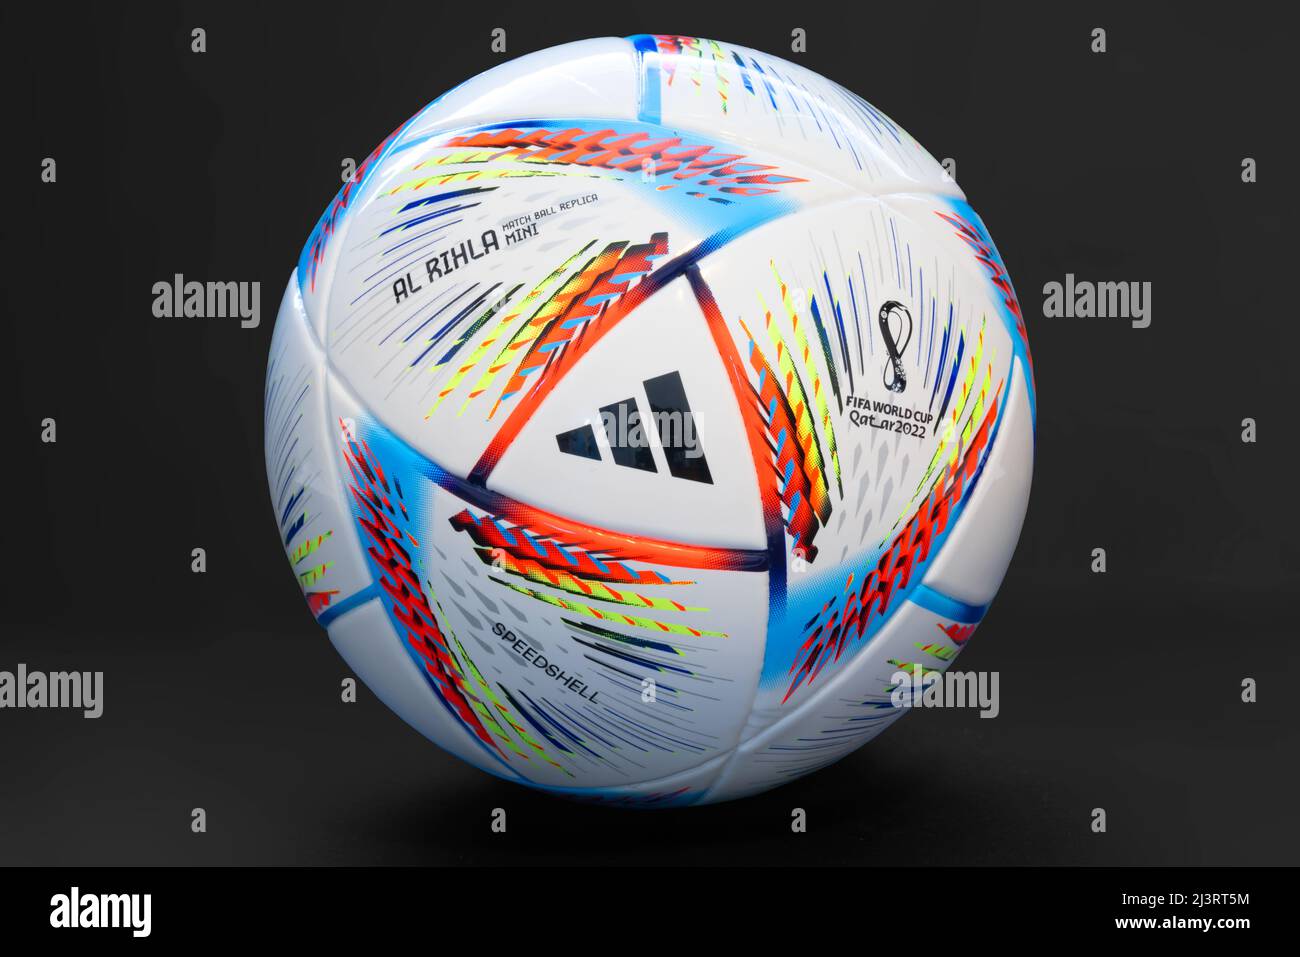 Lusail, Qatar. April 9, 2022. An Adidas Al Rihla mini ball Football compact size and foam core. 2022 FIFA World Cup Qatar Stock Photo